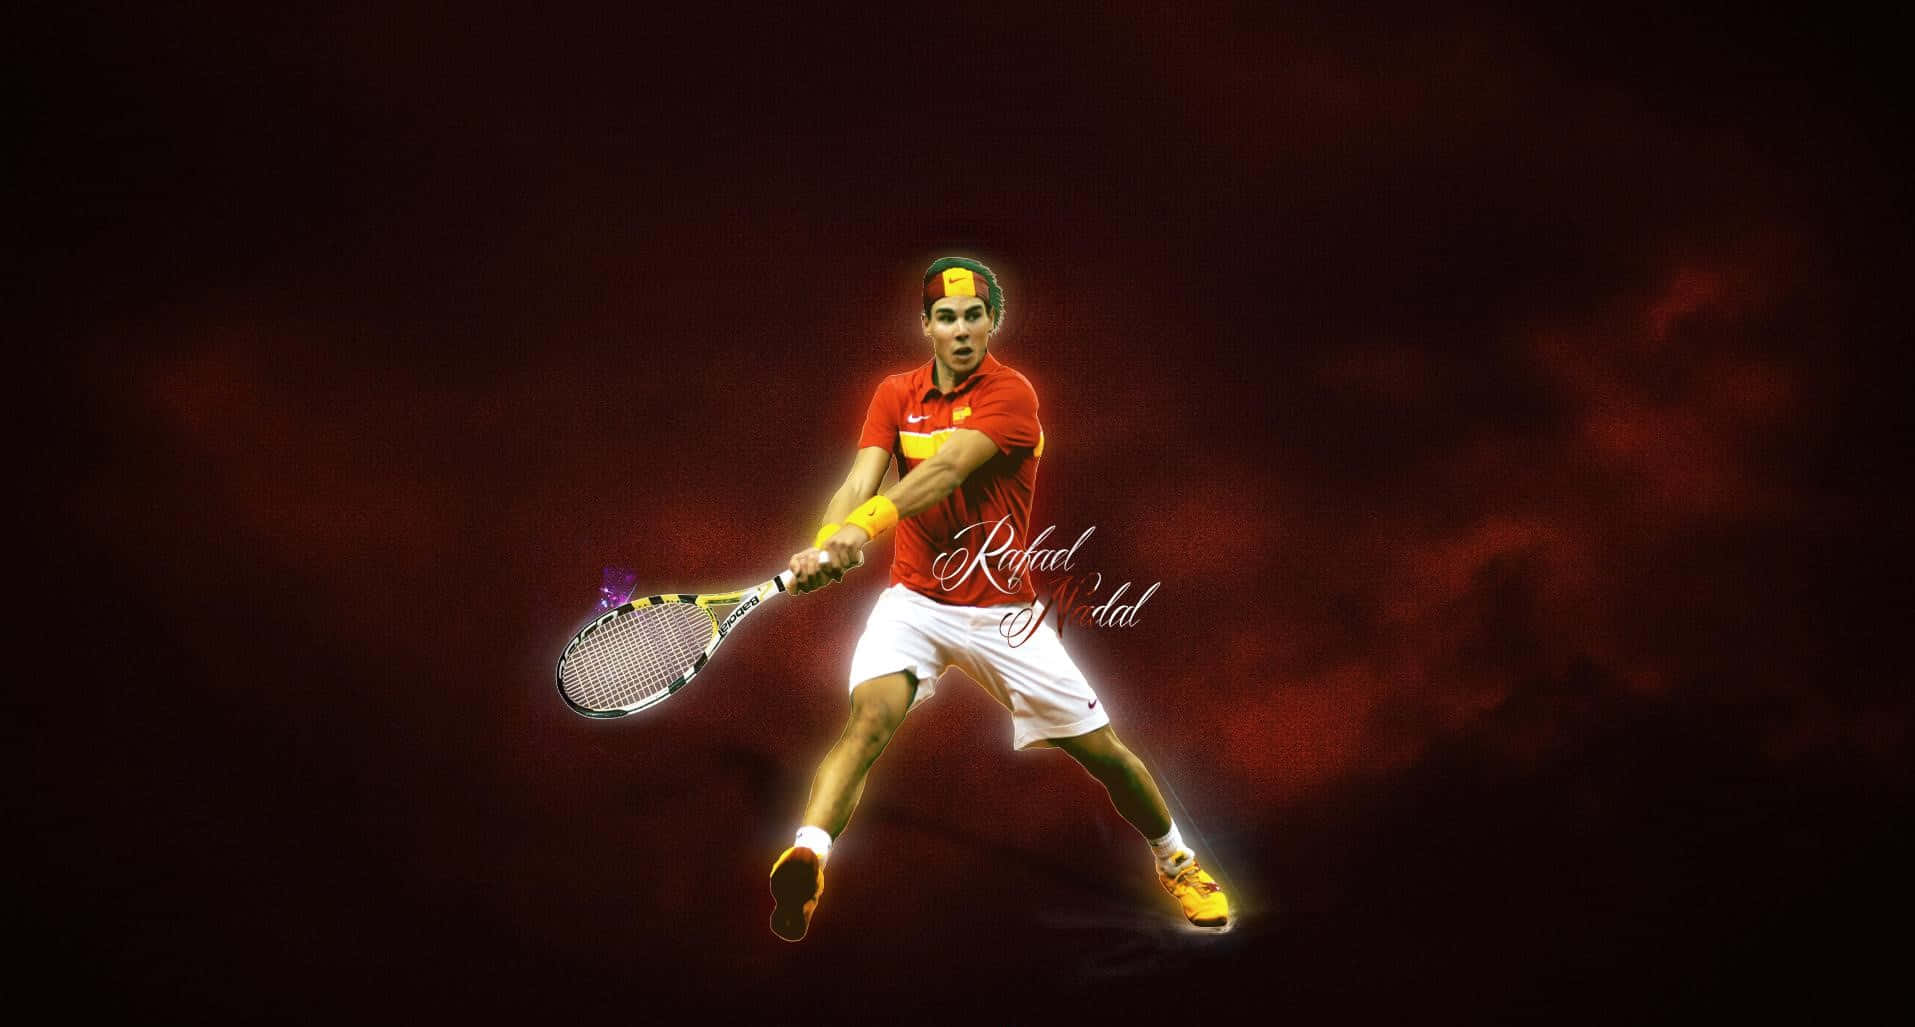 HD Spanish Tennis Player Rafael Nadal Background